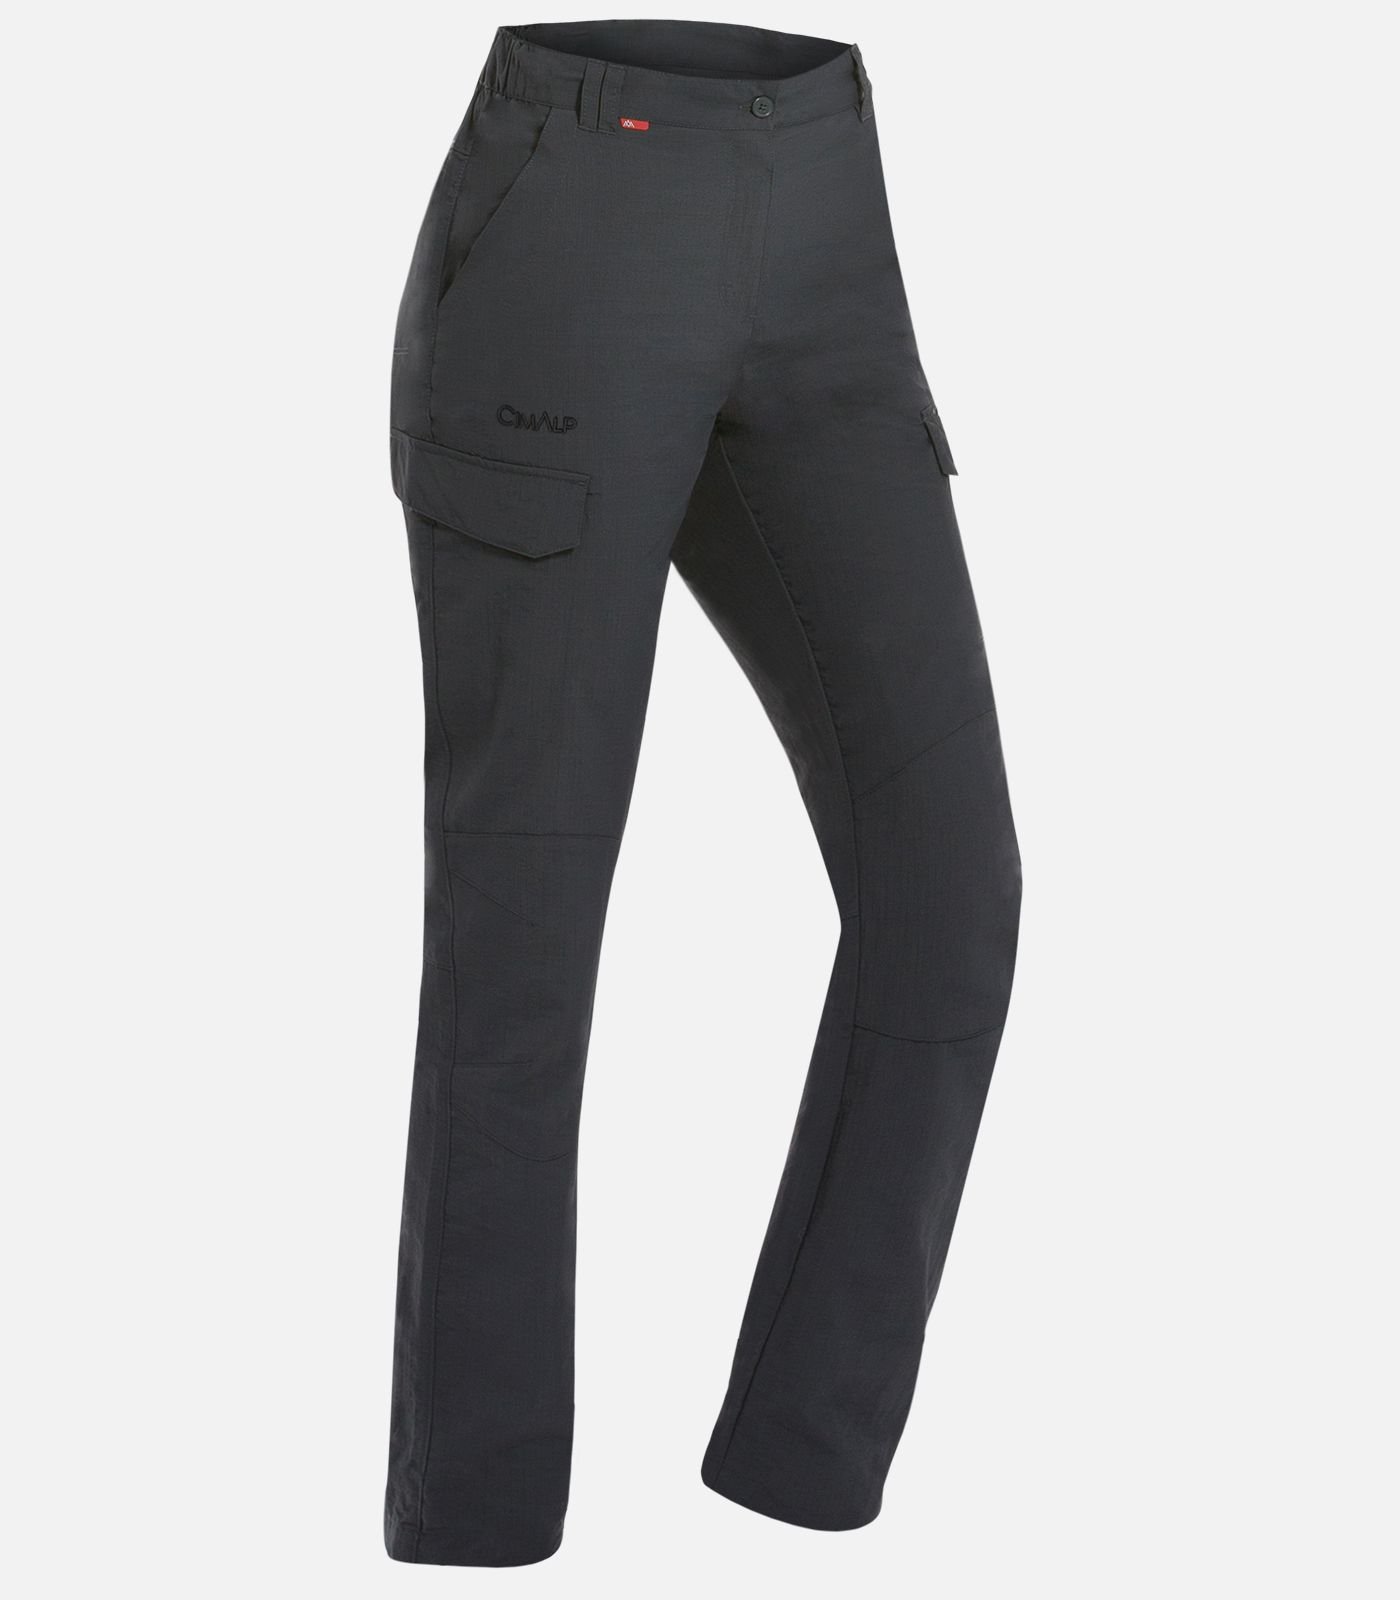 Buy Women's Regular Fit Hiking Pants Grey NH500 Online | Decathlon